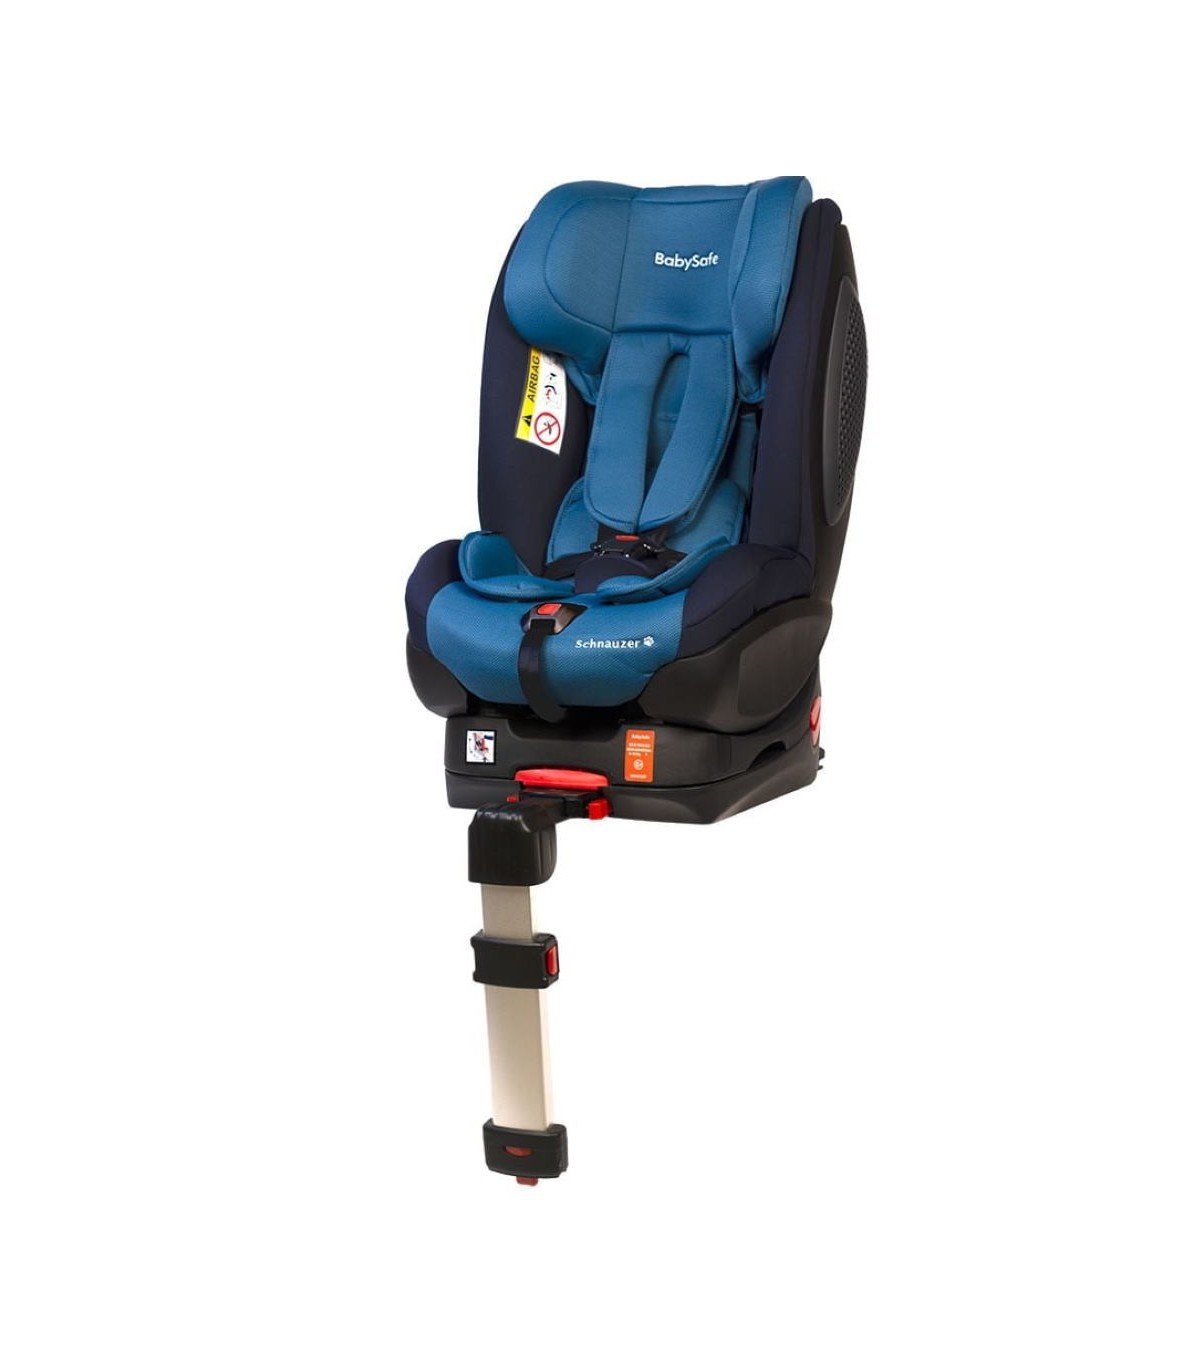 BabySafe Schnauzer Blue + Base ISOFIX Bērnu autosēdeklis 0-18 kg